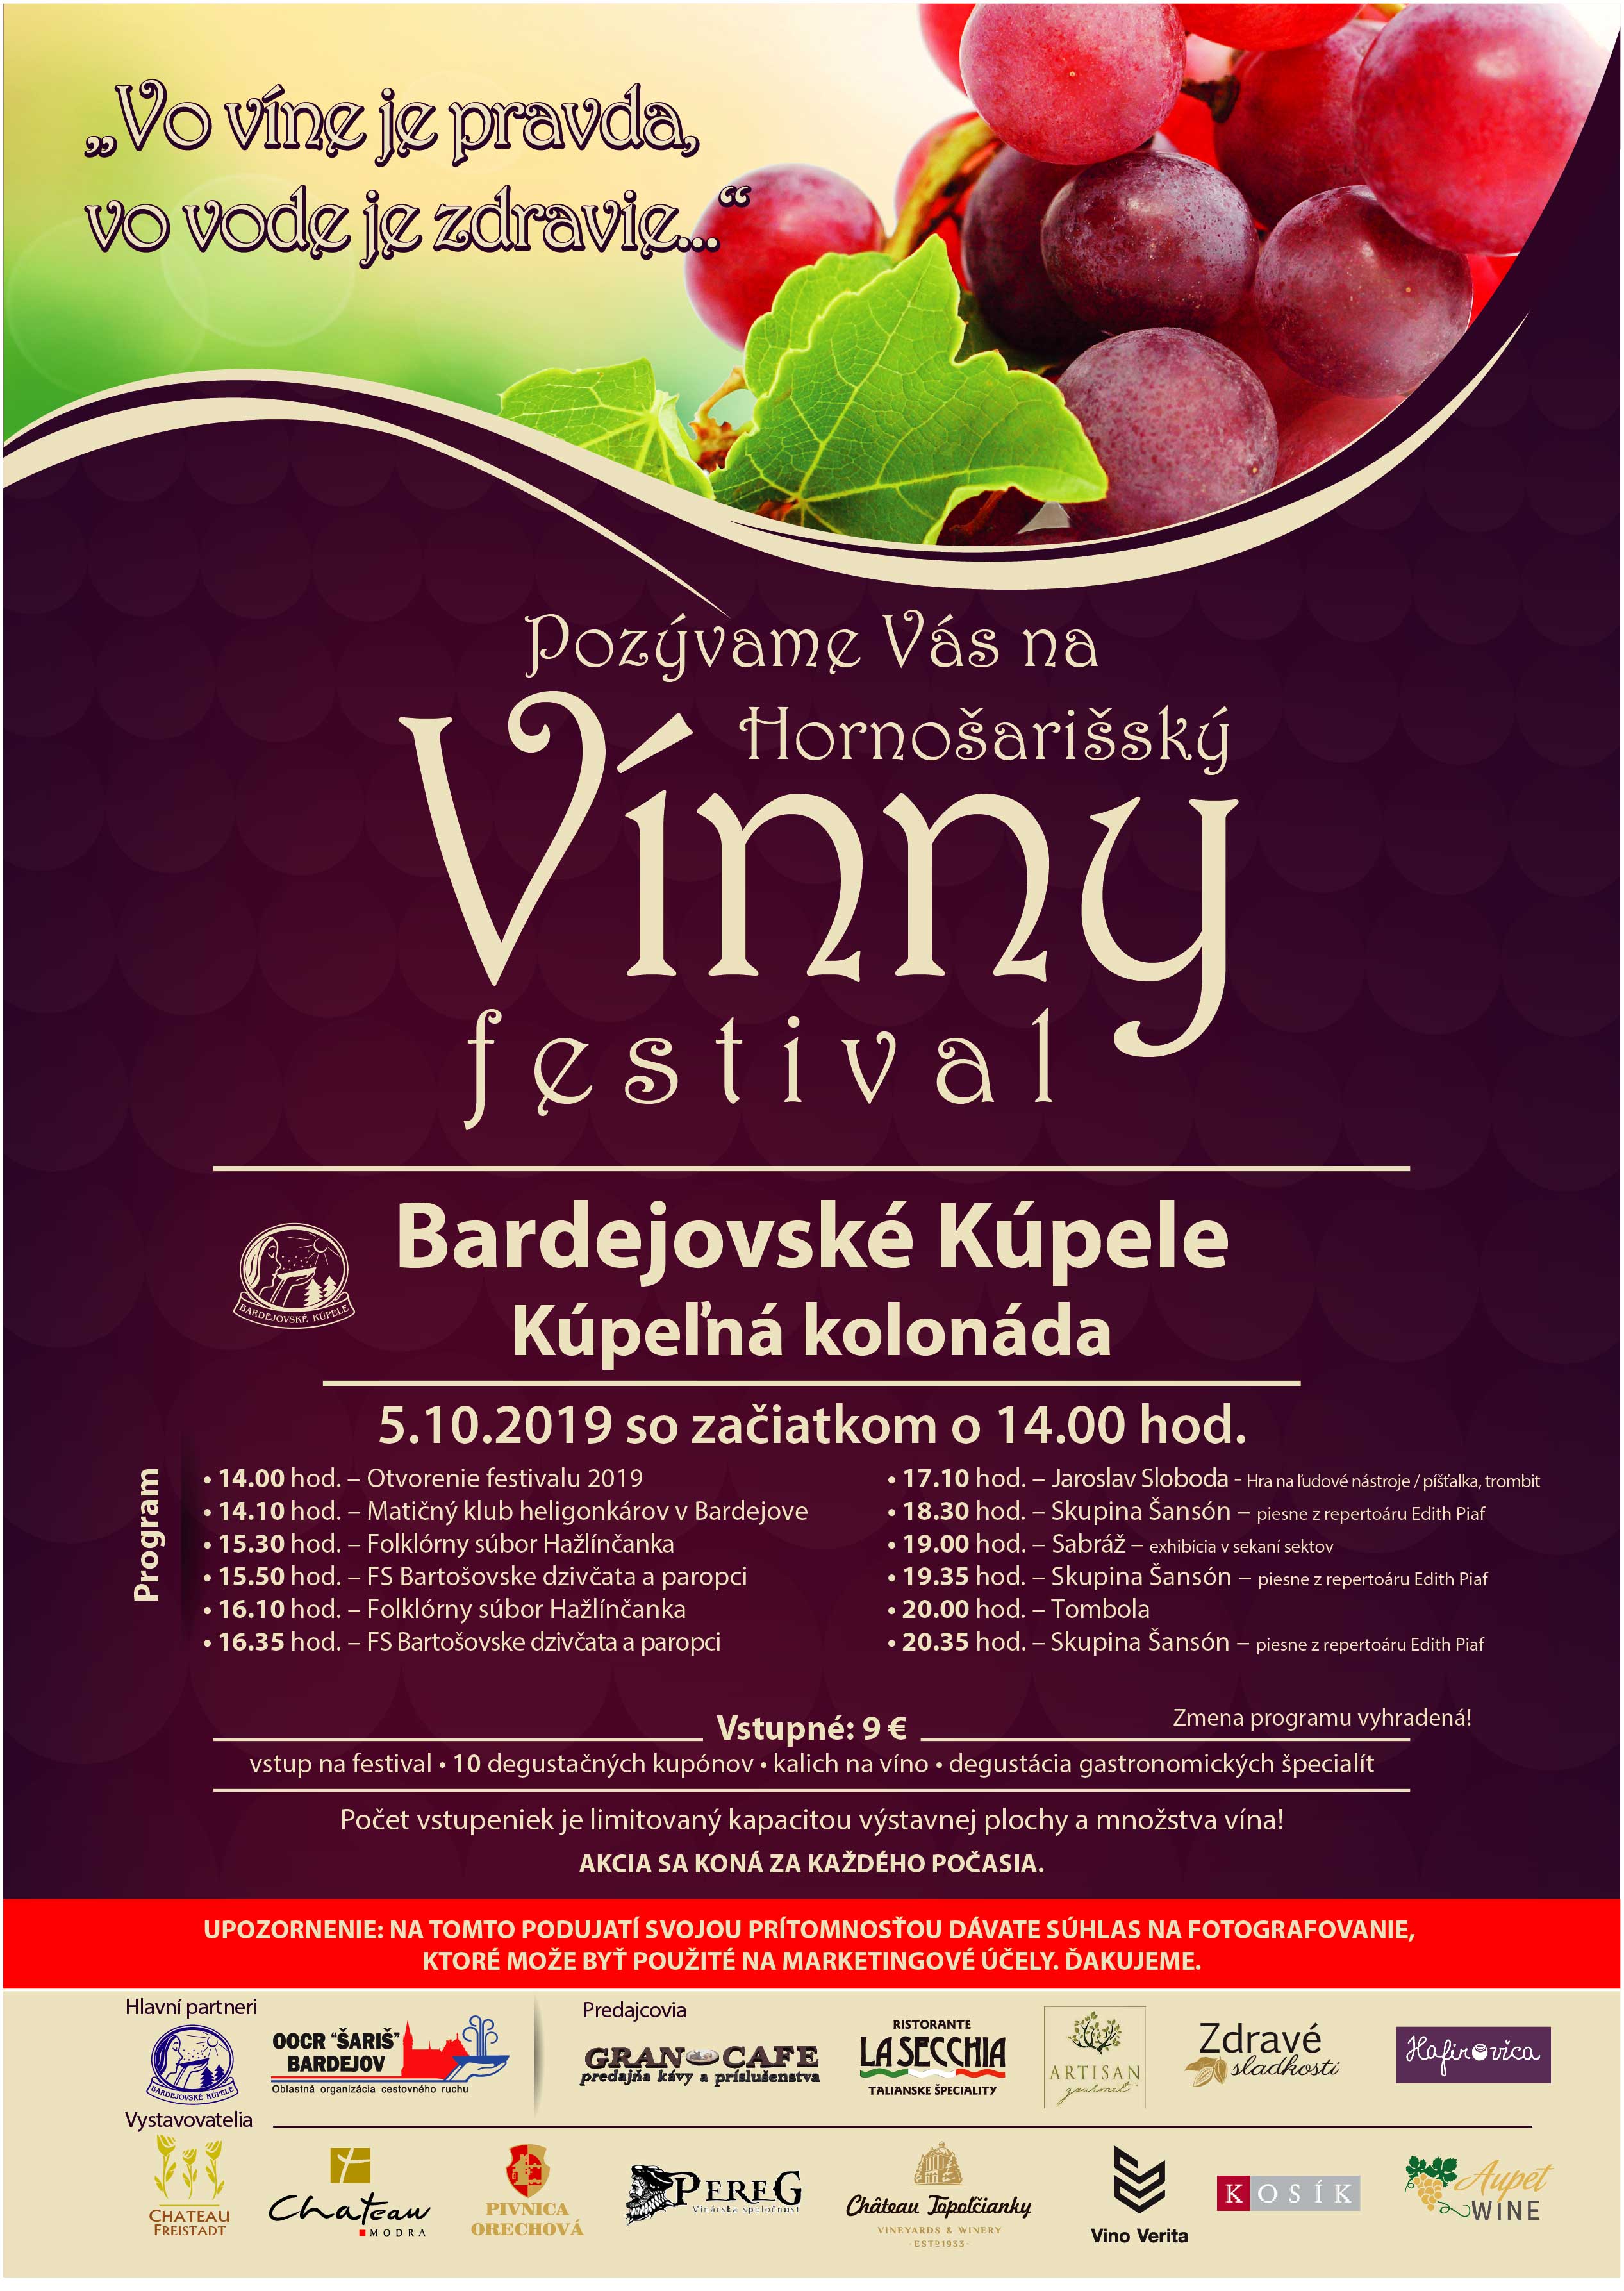 Hornoarisk vnny festival Bardejov 2019  - 5.ronk